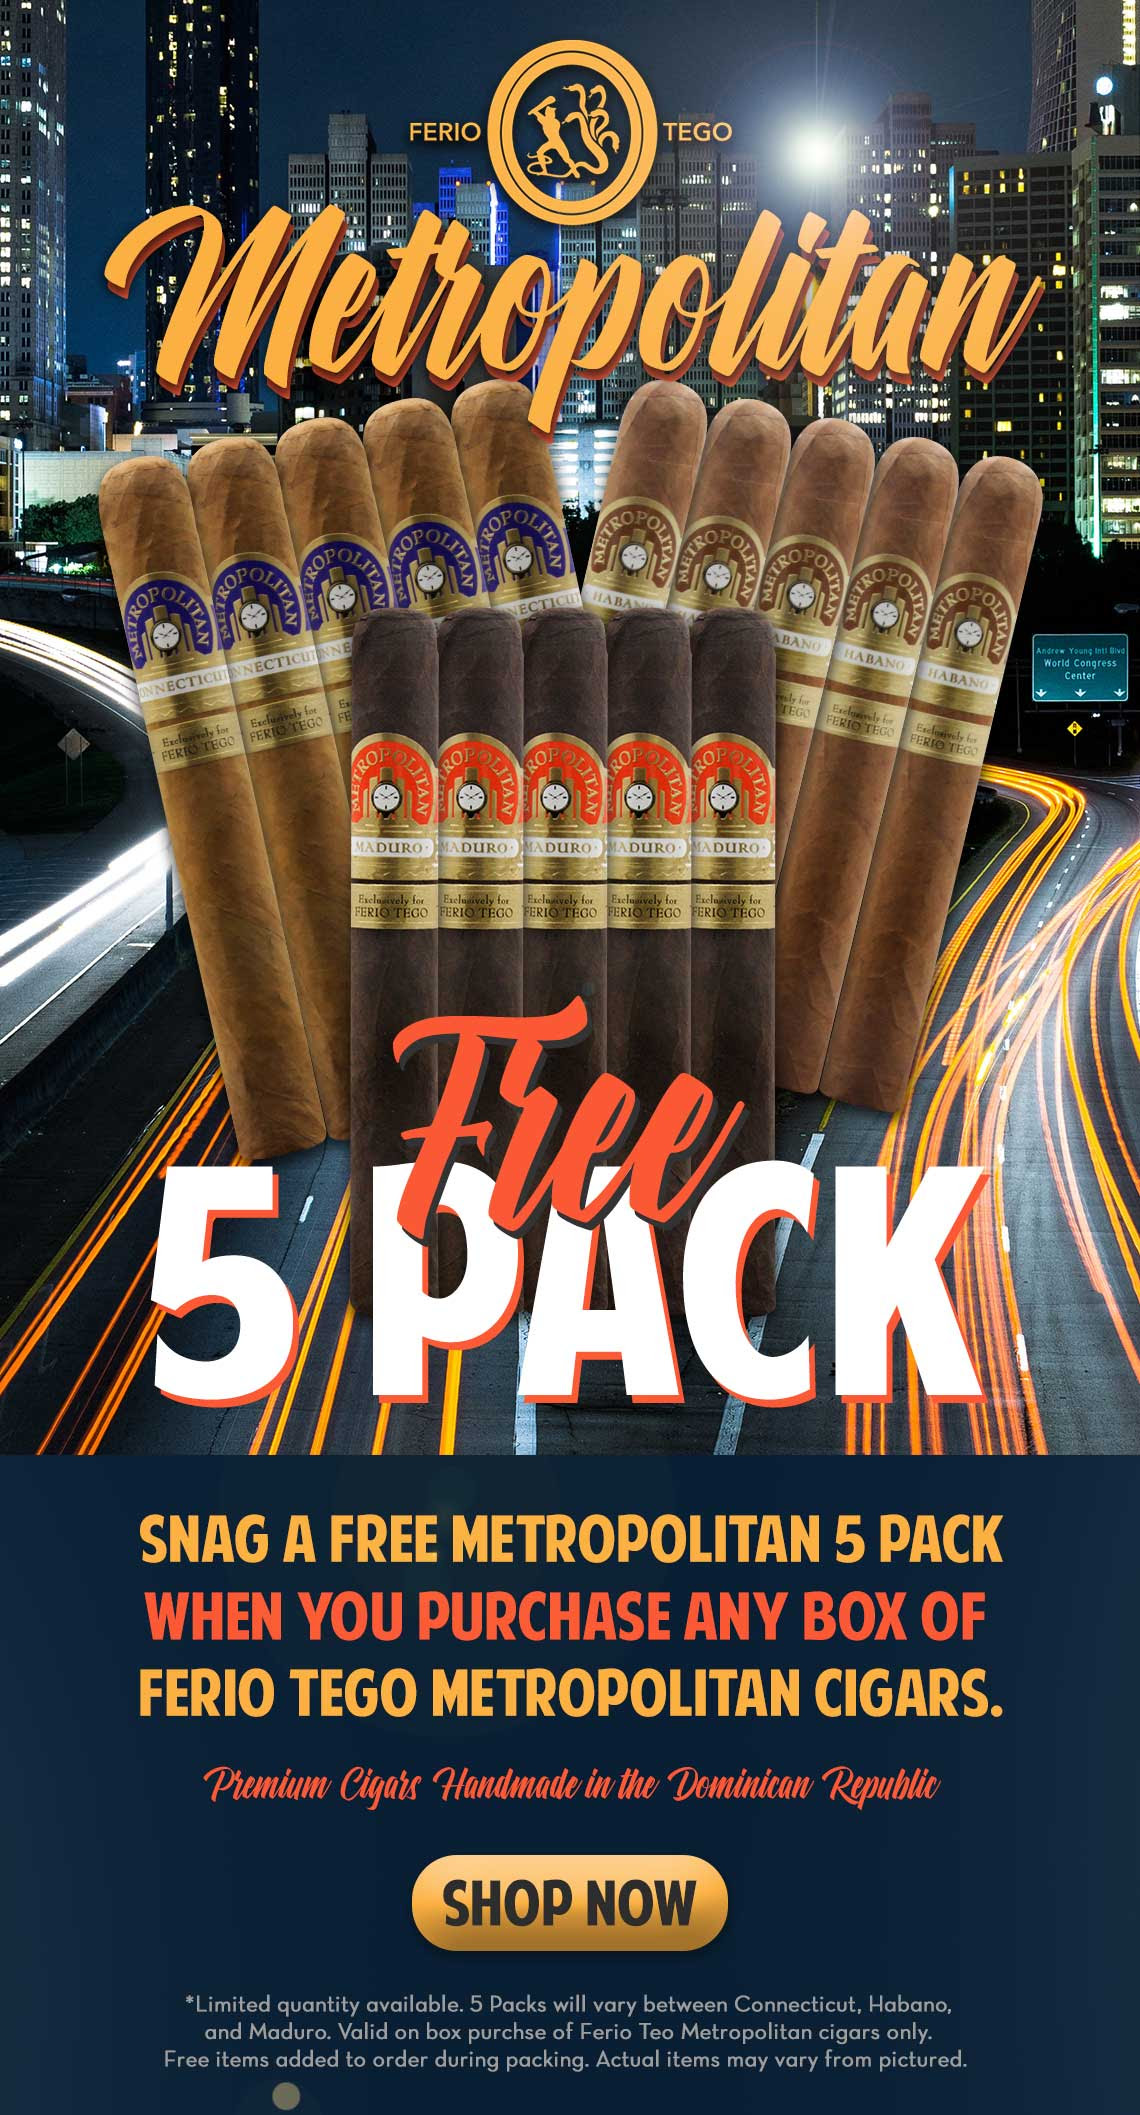 Free Metropolitan 5 Pack Offer